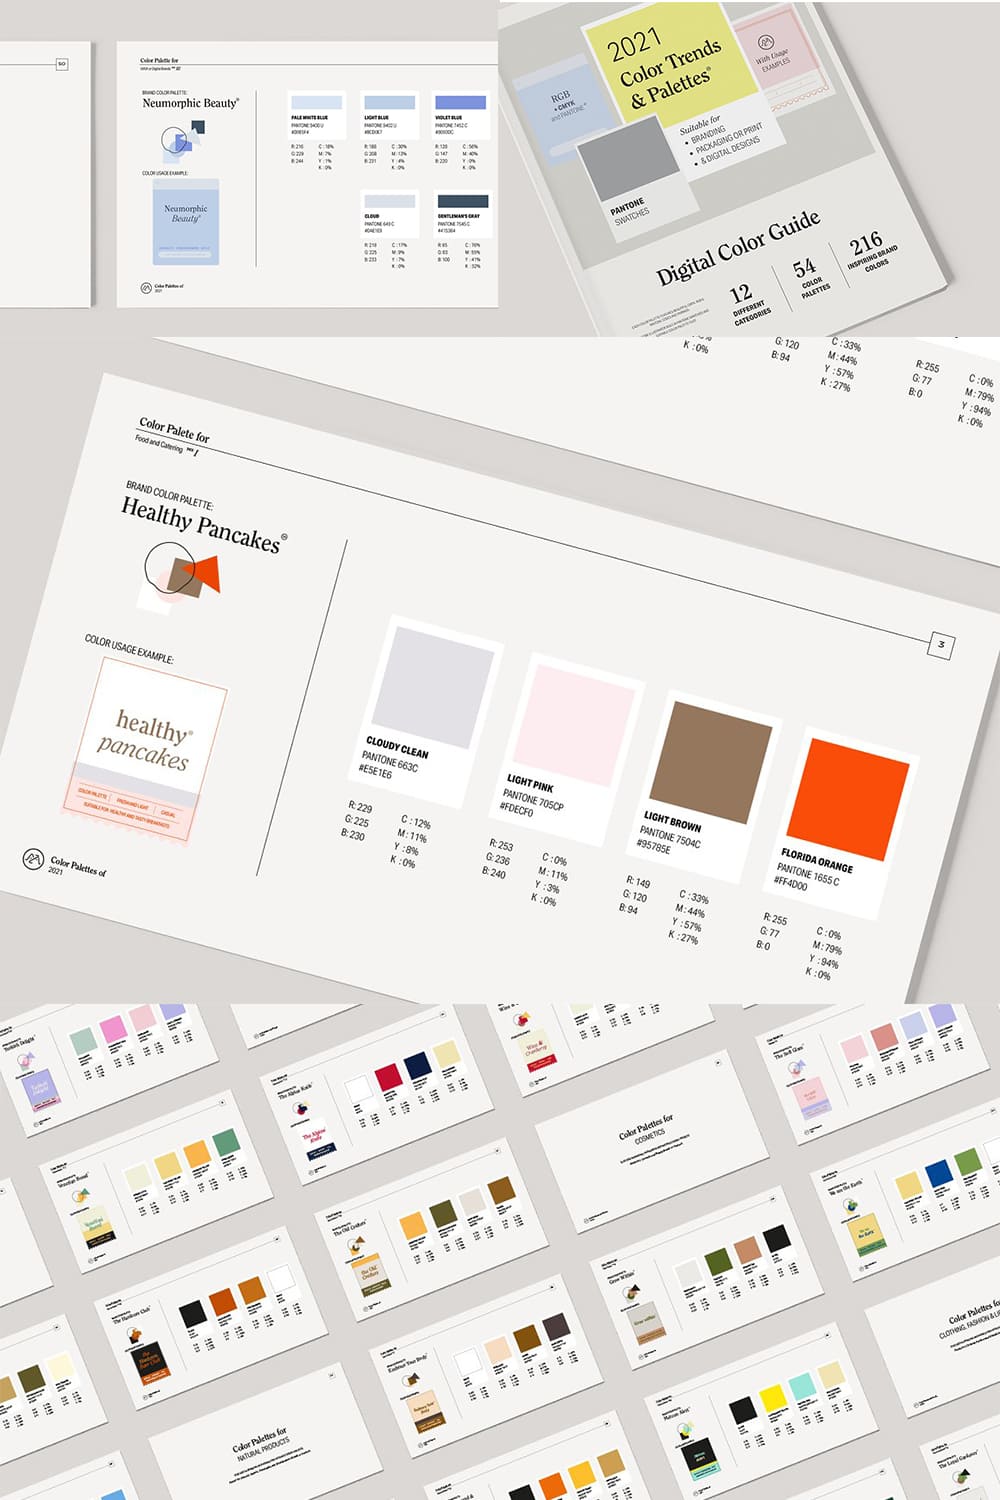 2021:Color Palettes and Color Trends Pinterest image4.